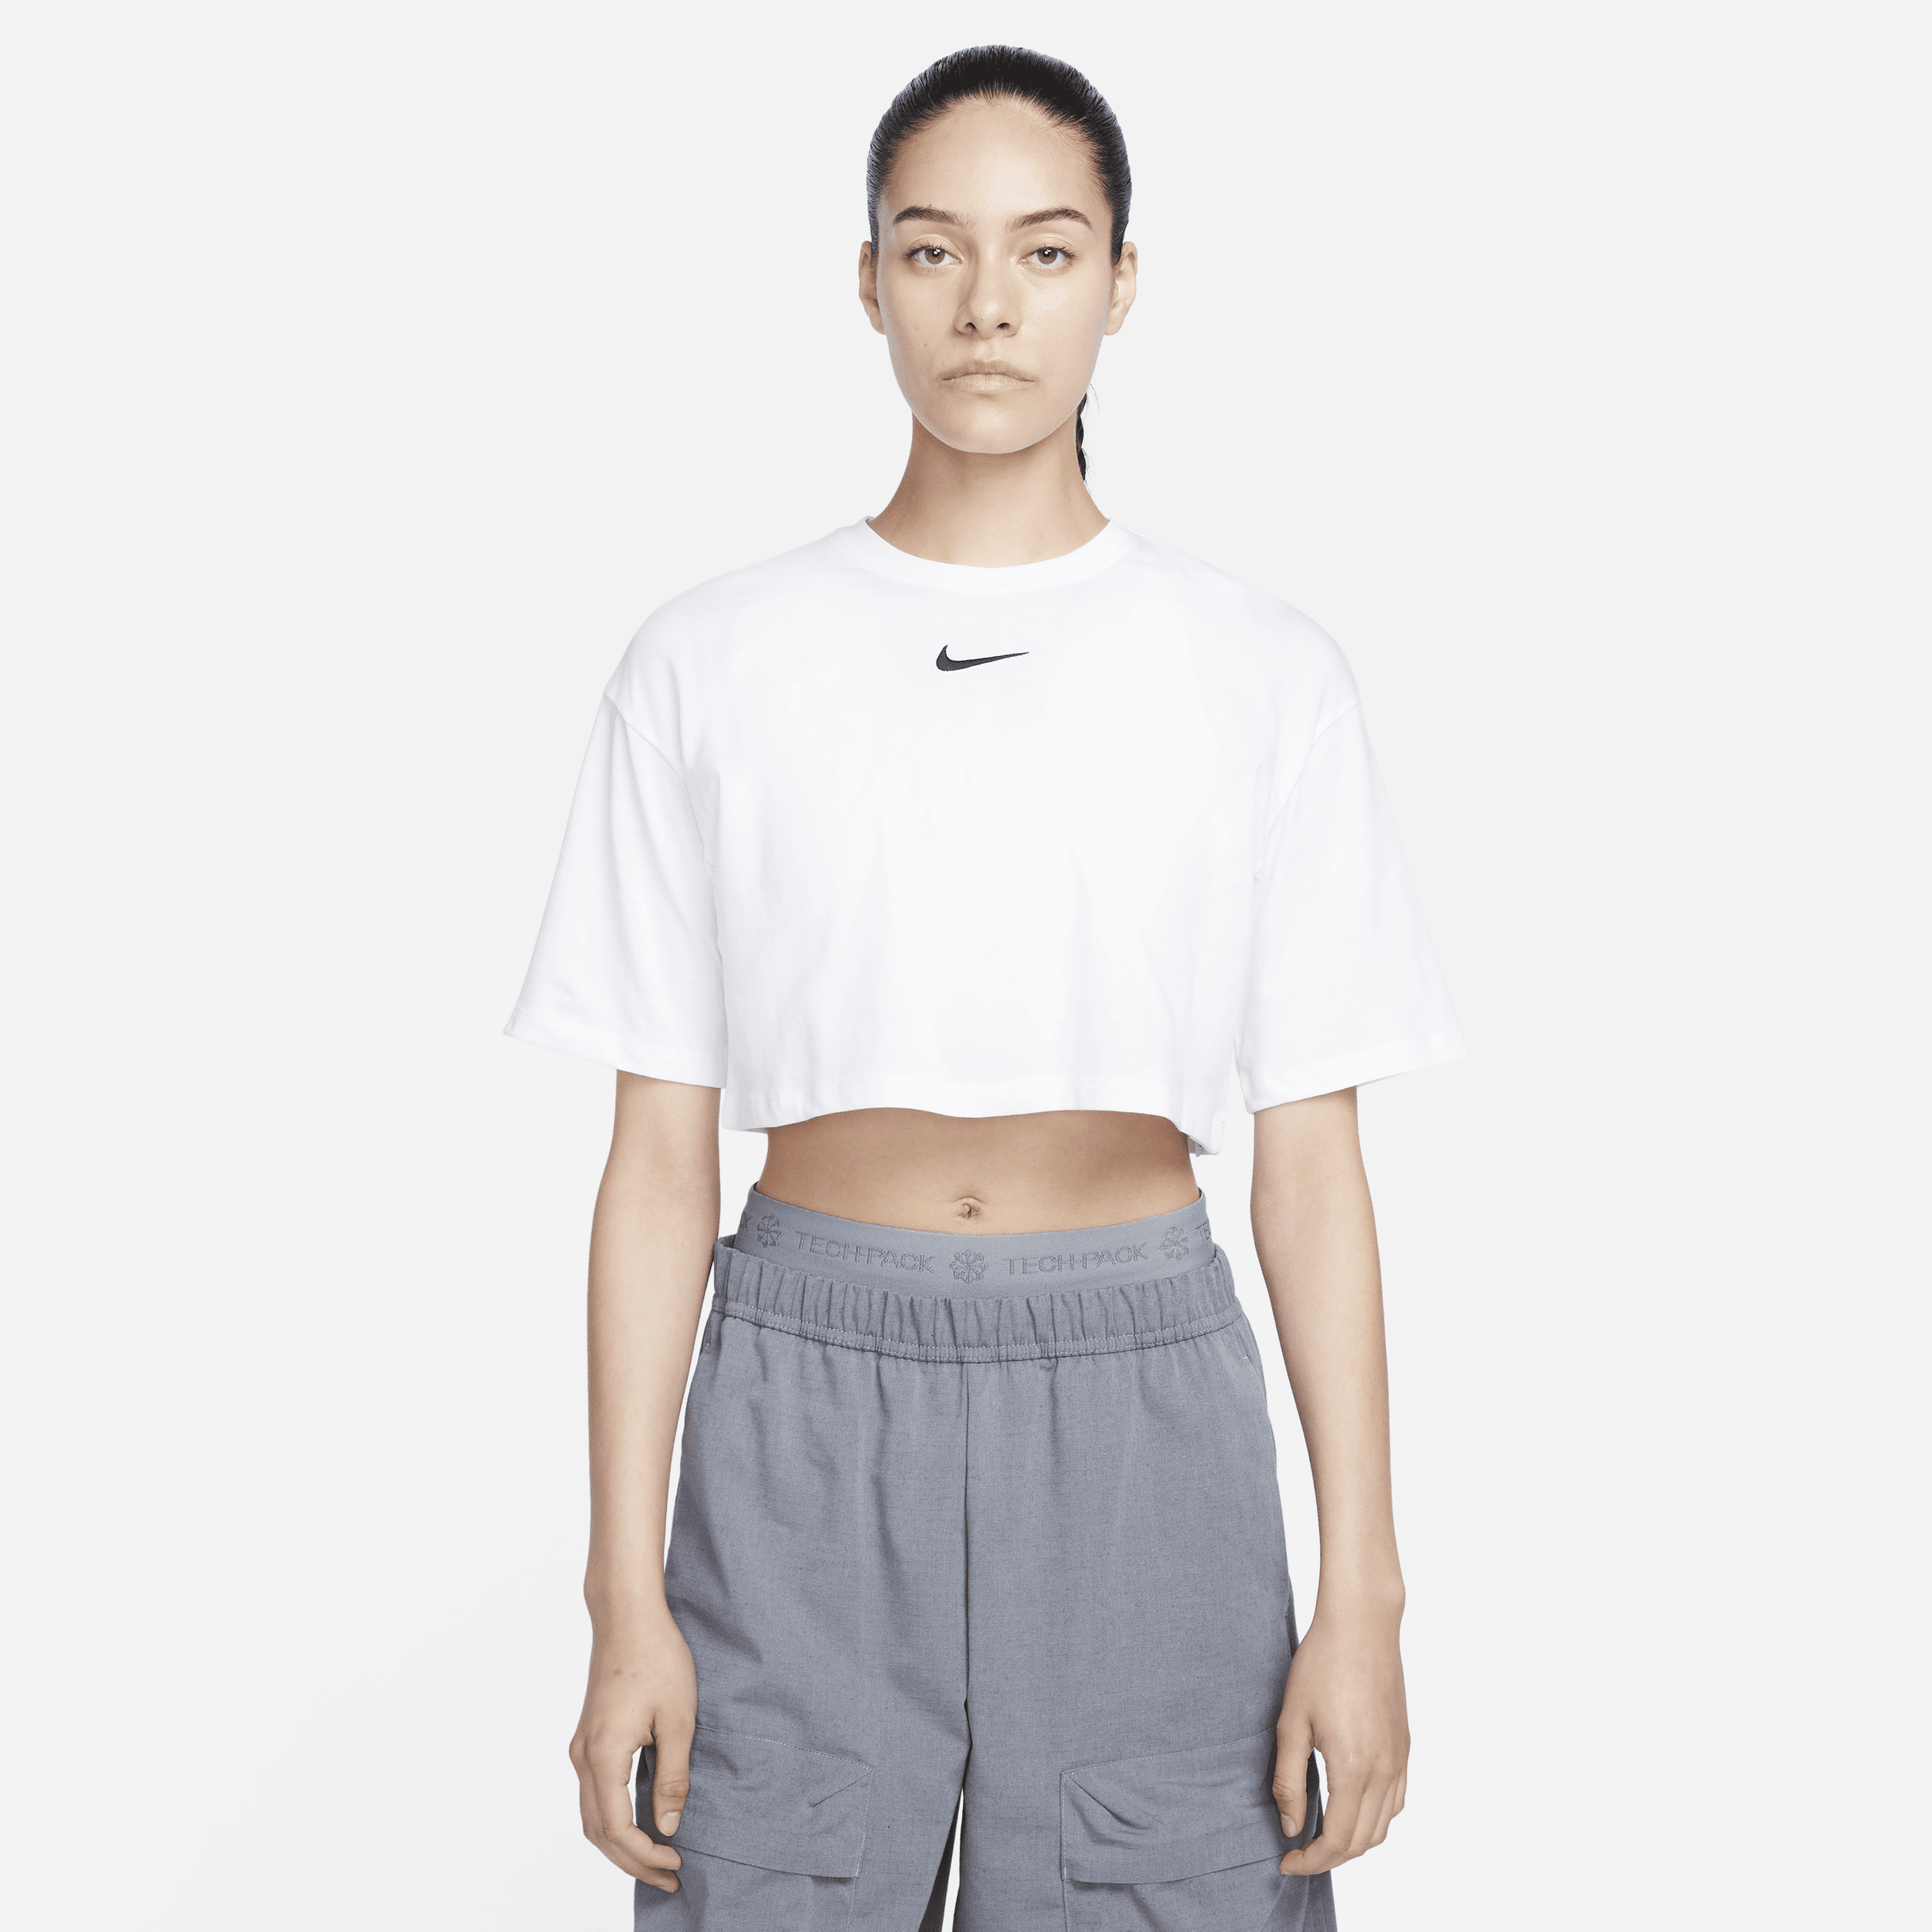 Kort Nike Sportswear-T-shirt til kvinder - hvid